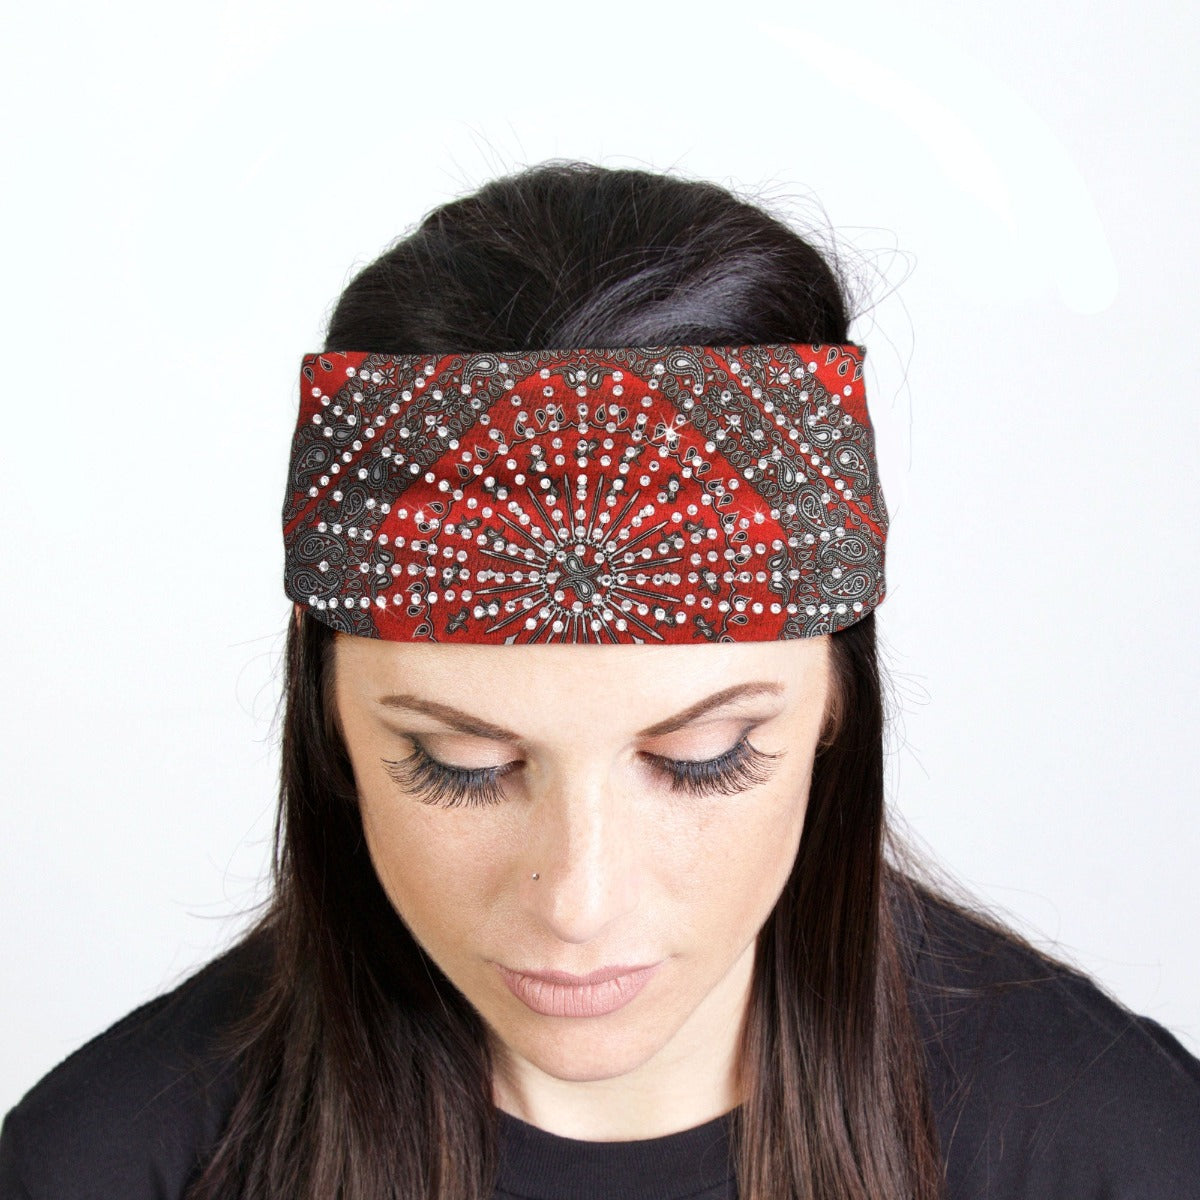 A woman with a biker style wearing a Hot Leathers Bandana Headband Wraps w/Rhinestones, Red.